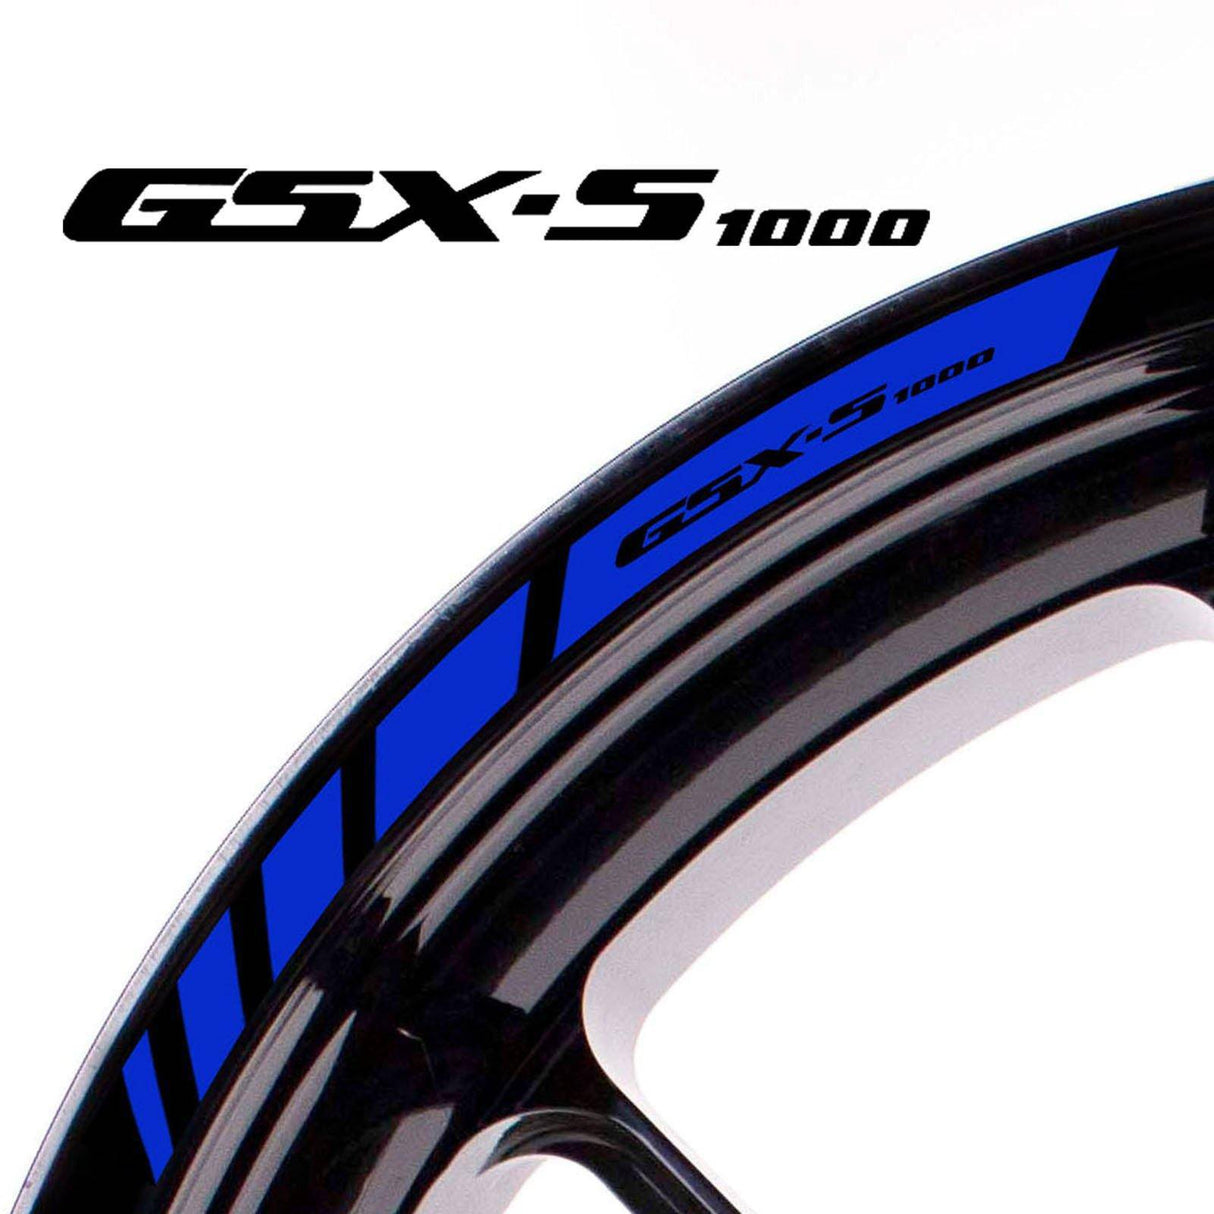 For Suzuki GSX-S 1000 Logo 17 inch Rim Wheel Stickers MM01B Rim Edge Tapes.